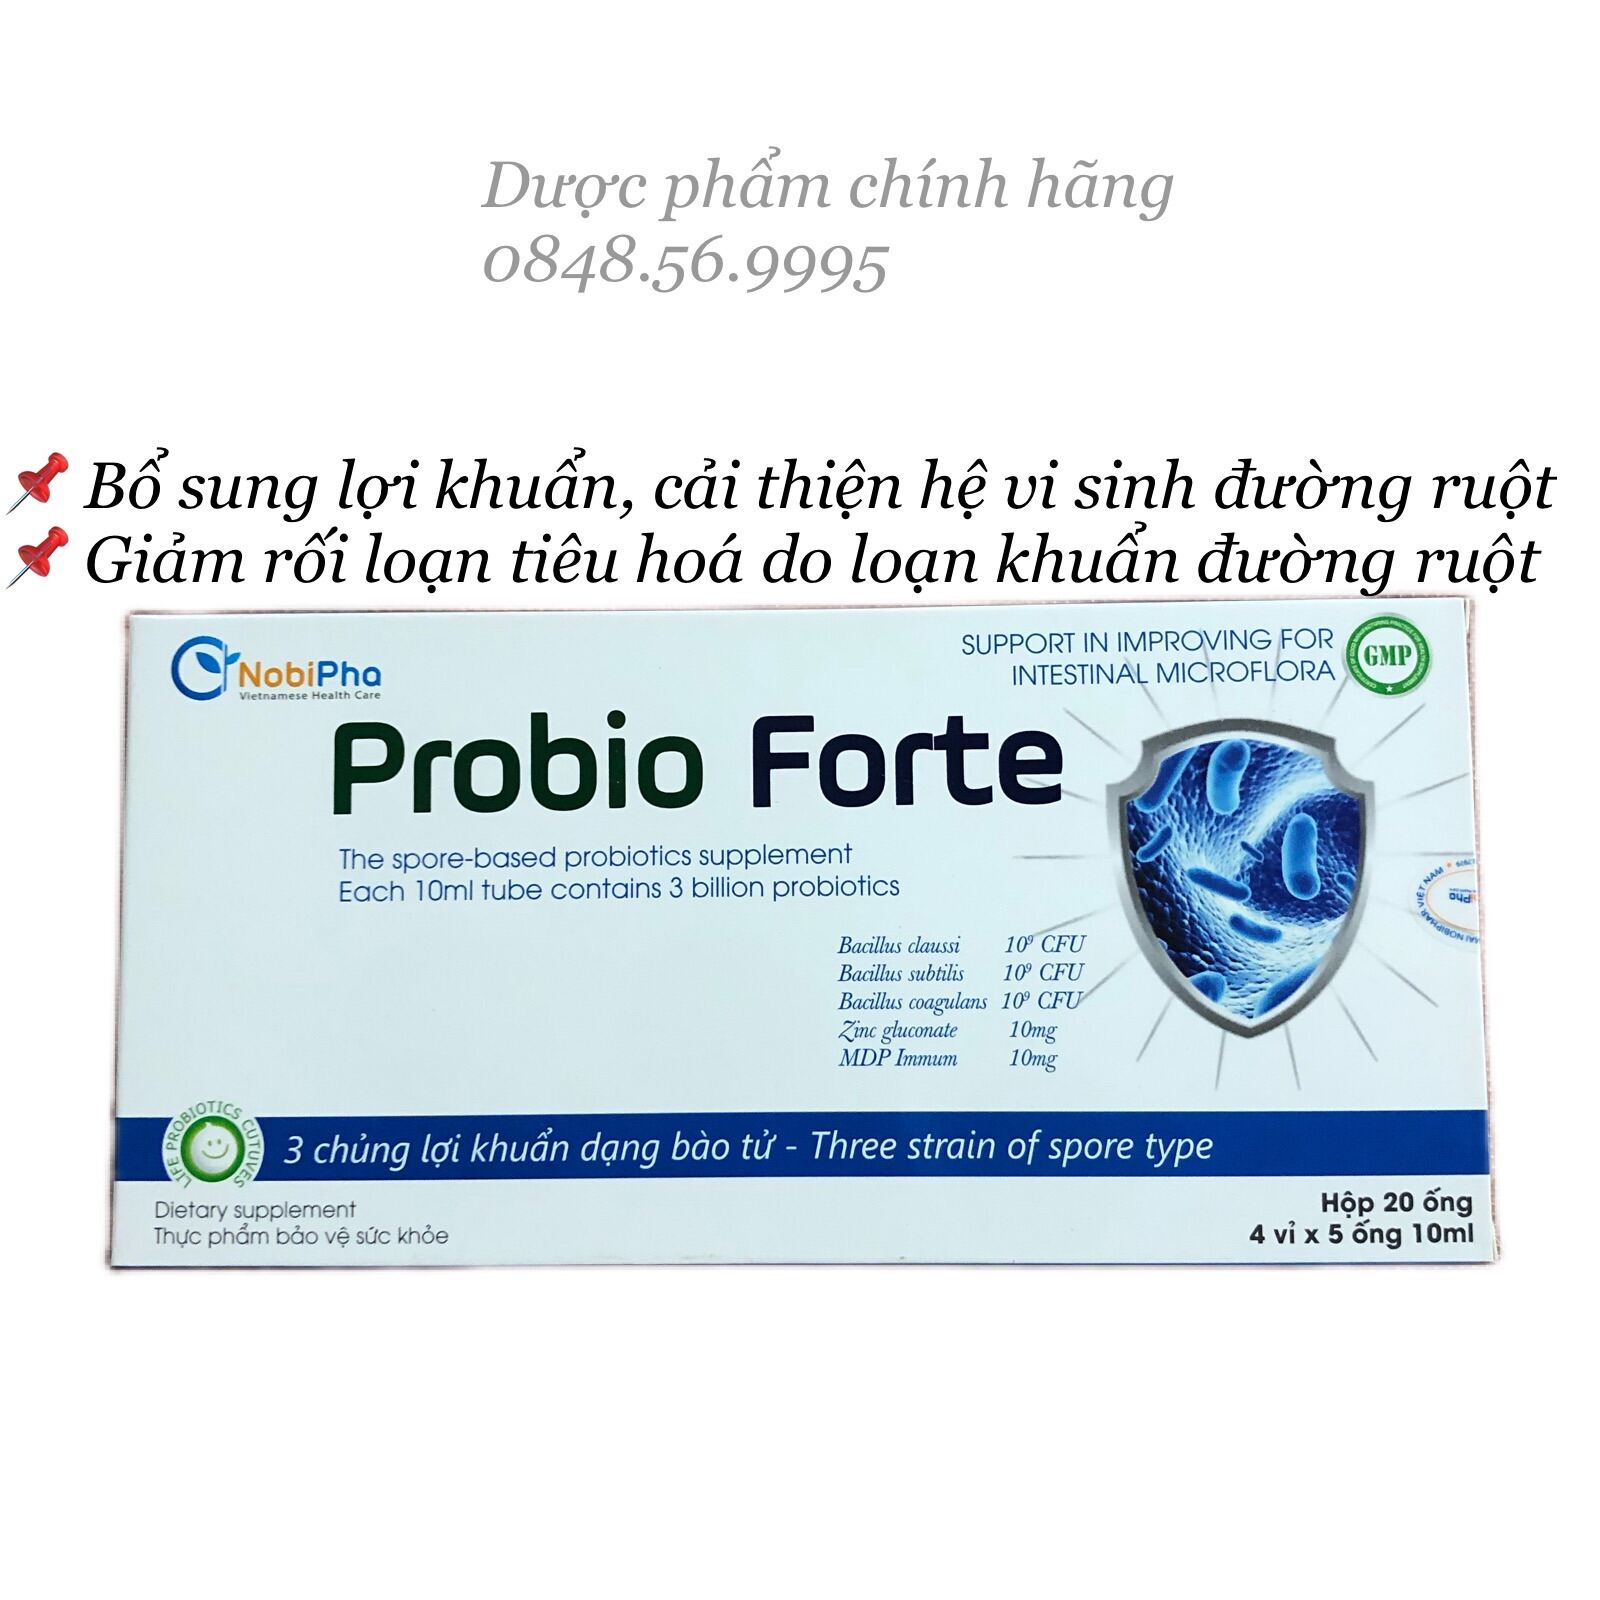 Men vi sinh Probio Forte ống uống 10ml - Bổ sung lợi khuẩn